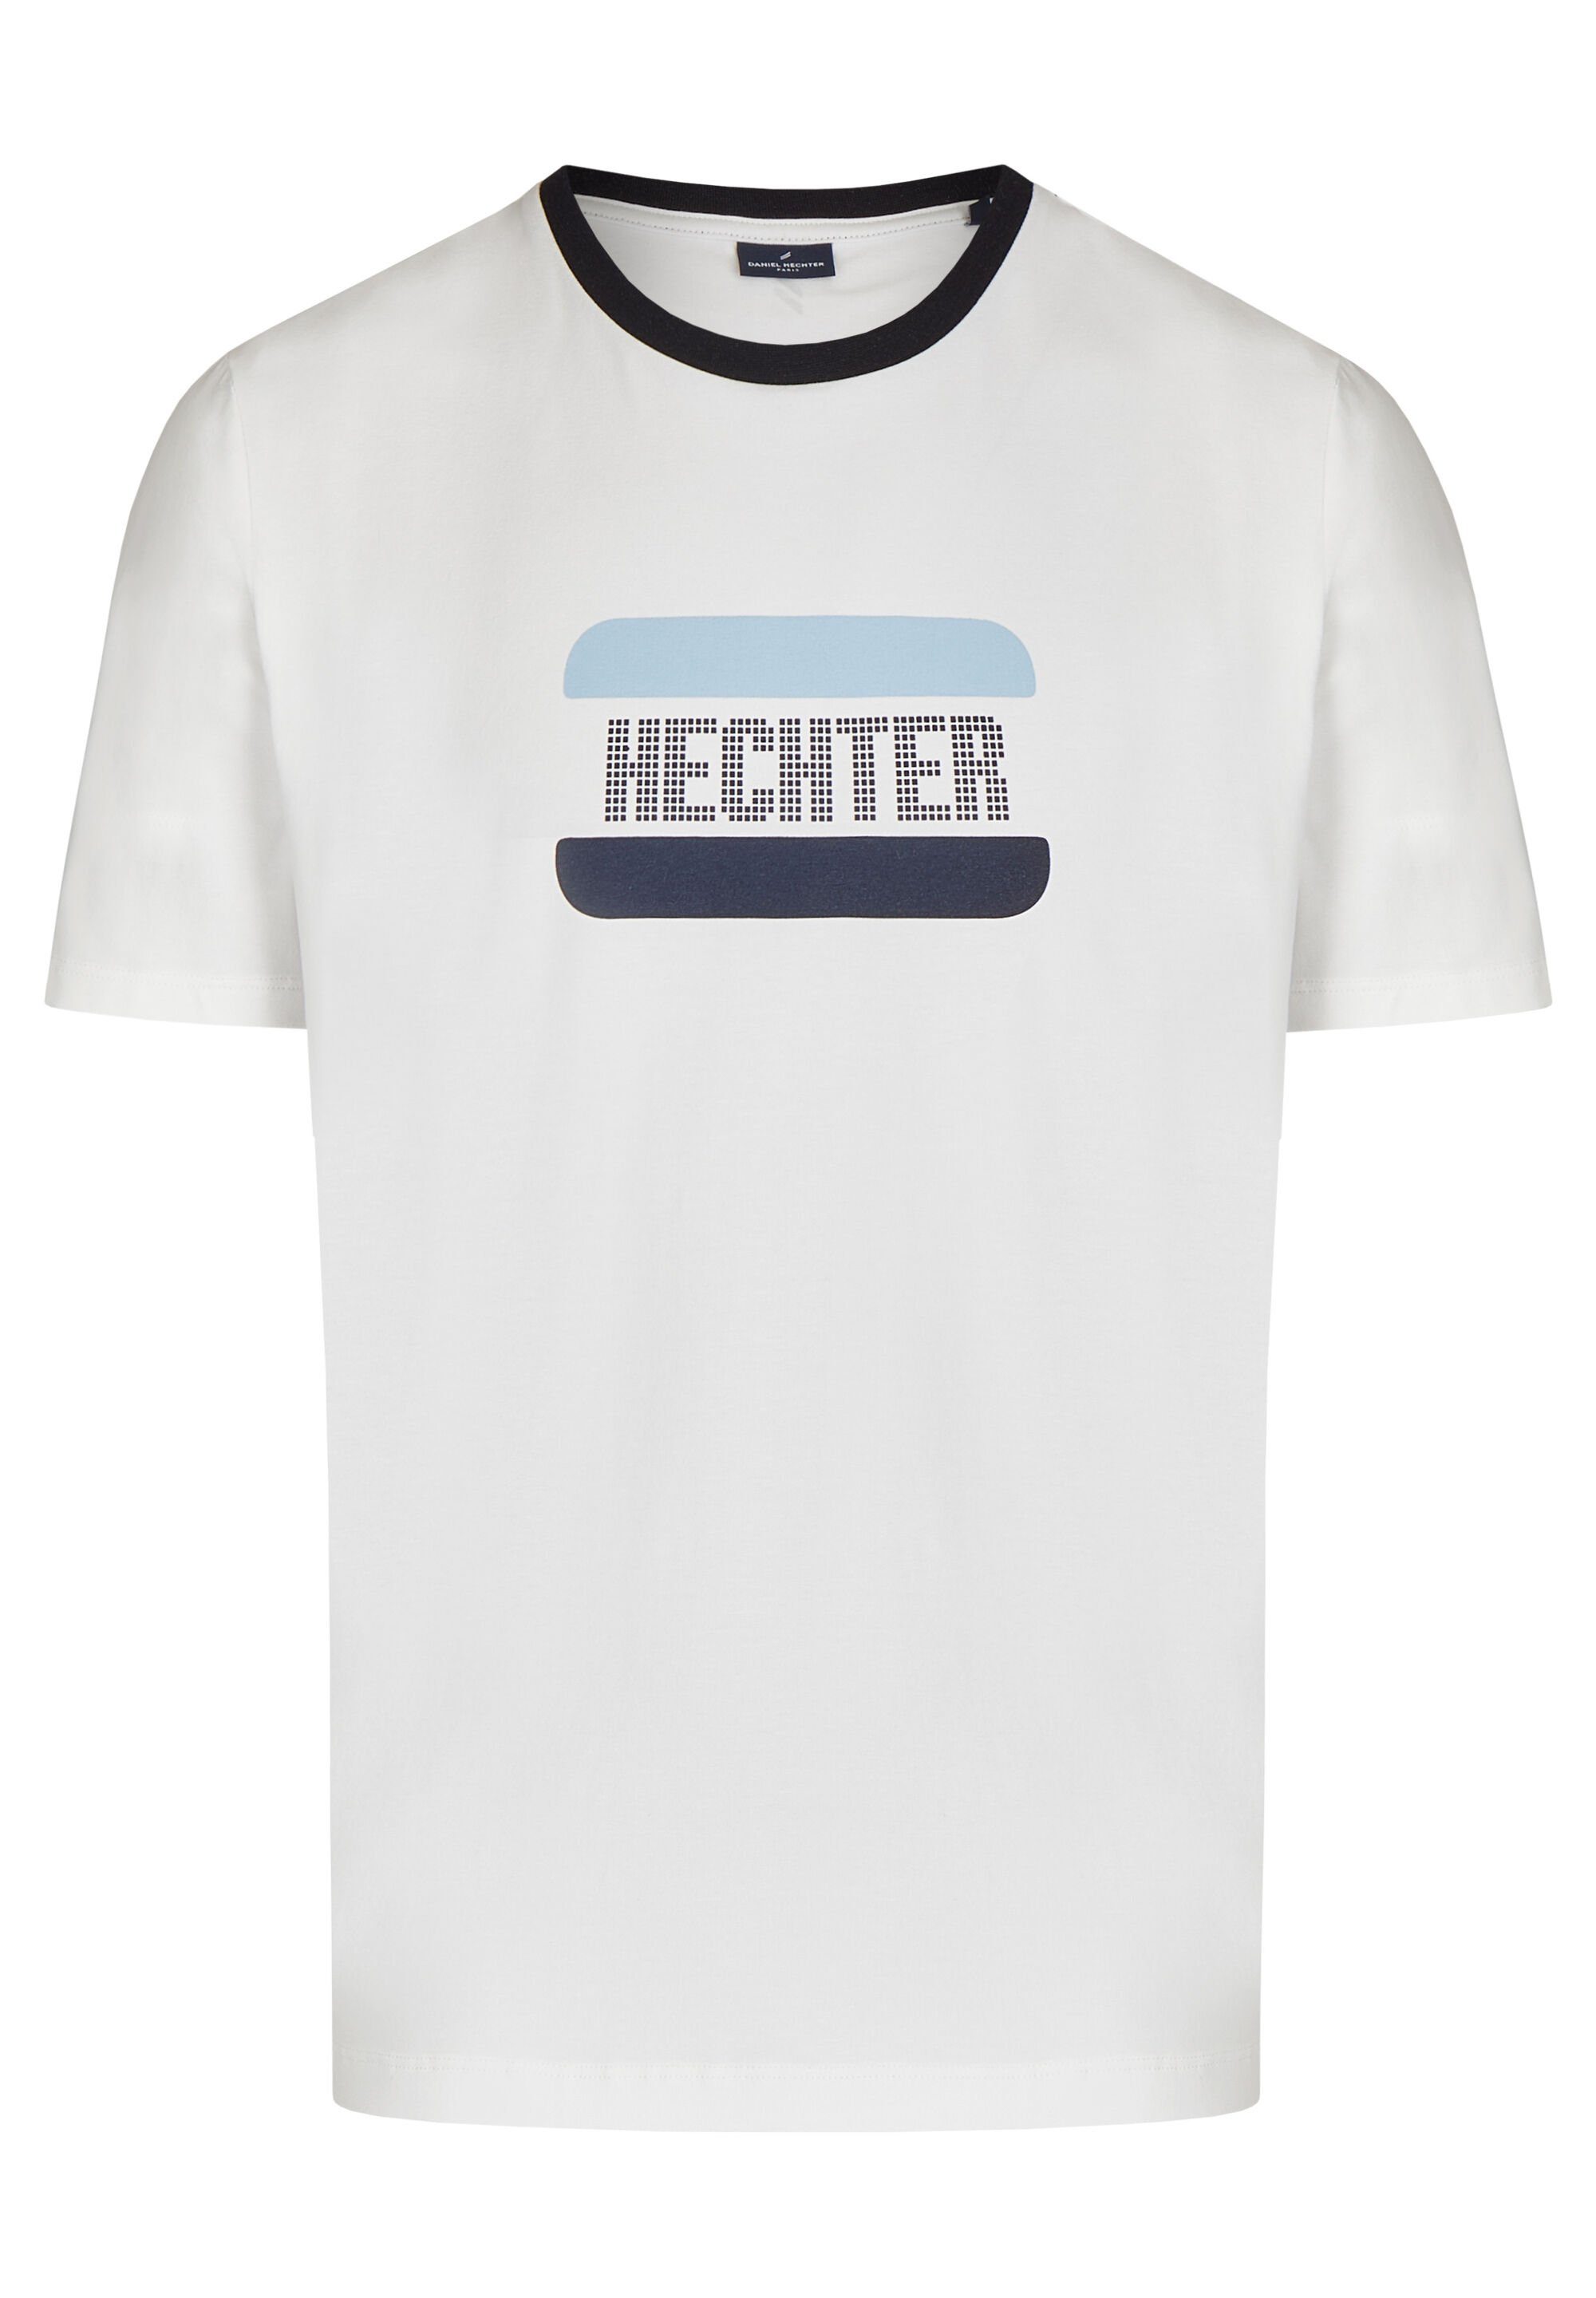 HECHTER PARIS Iconic Print mit T-Shirt white